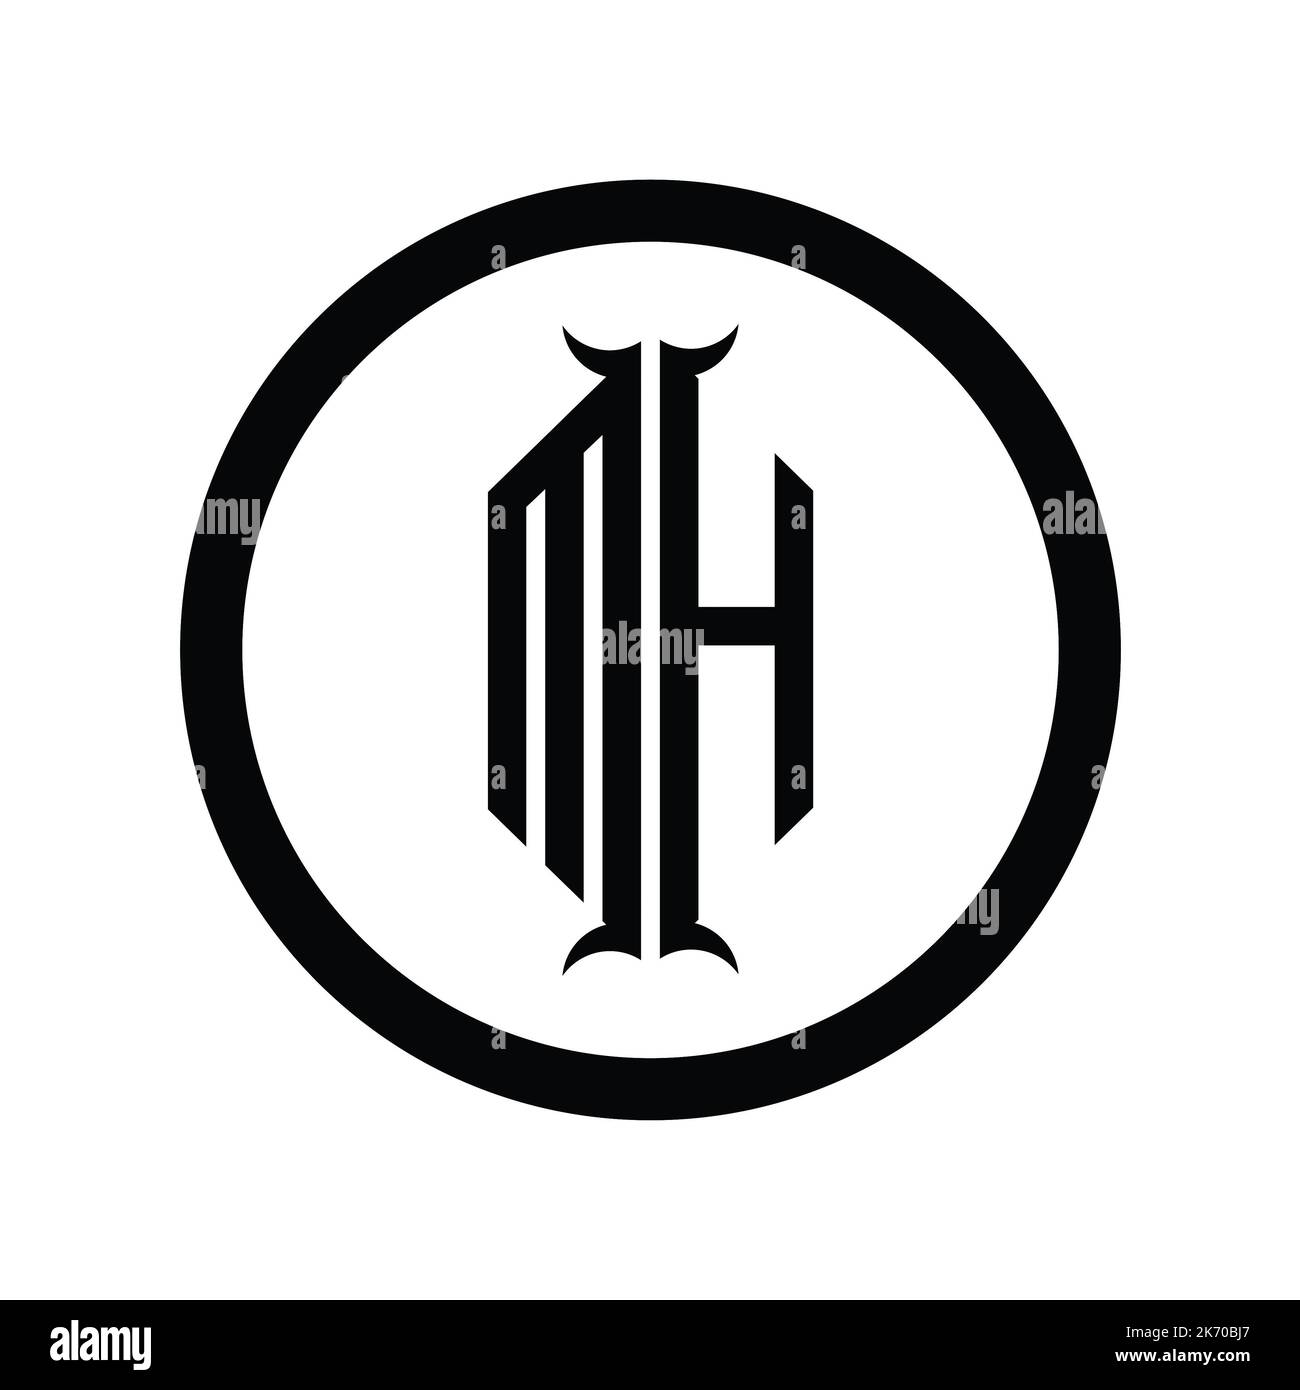 HM Logo monogram letter with hexagon horn shape design template Stock Photo